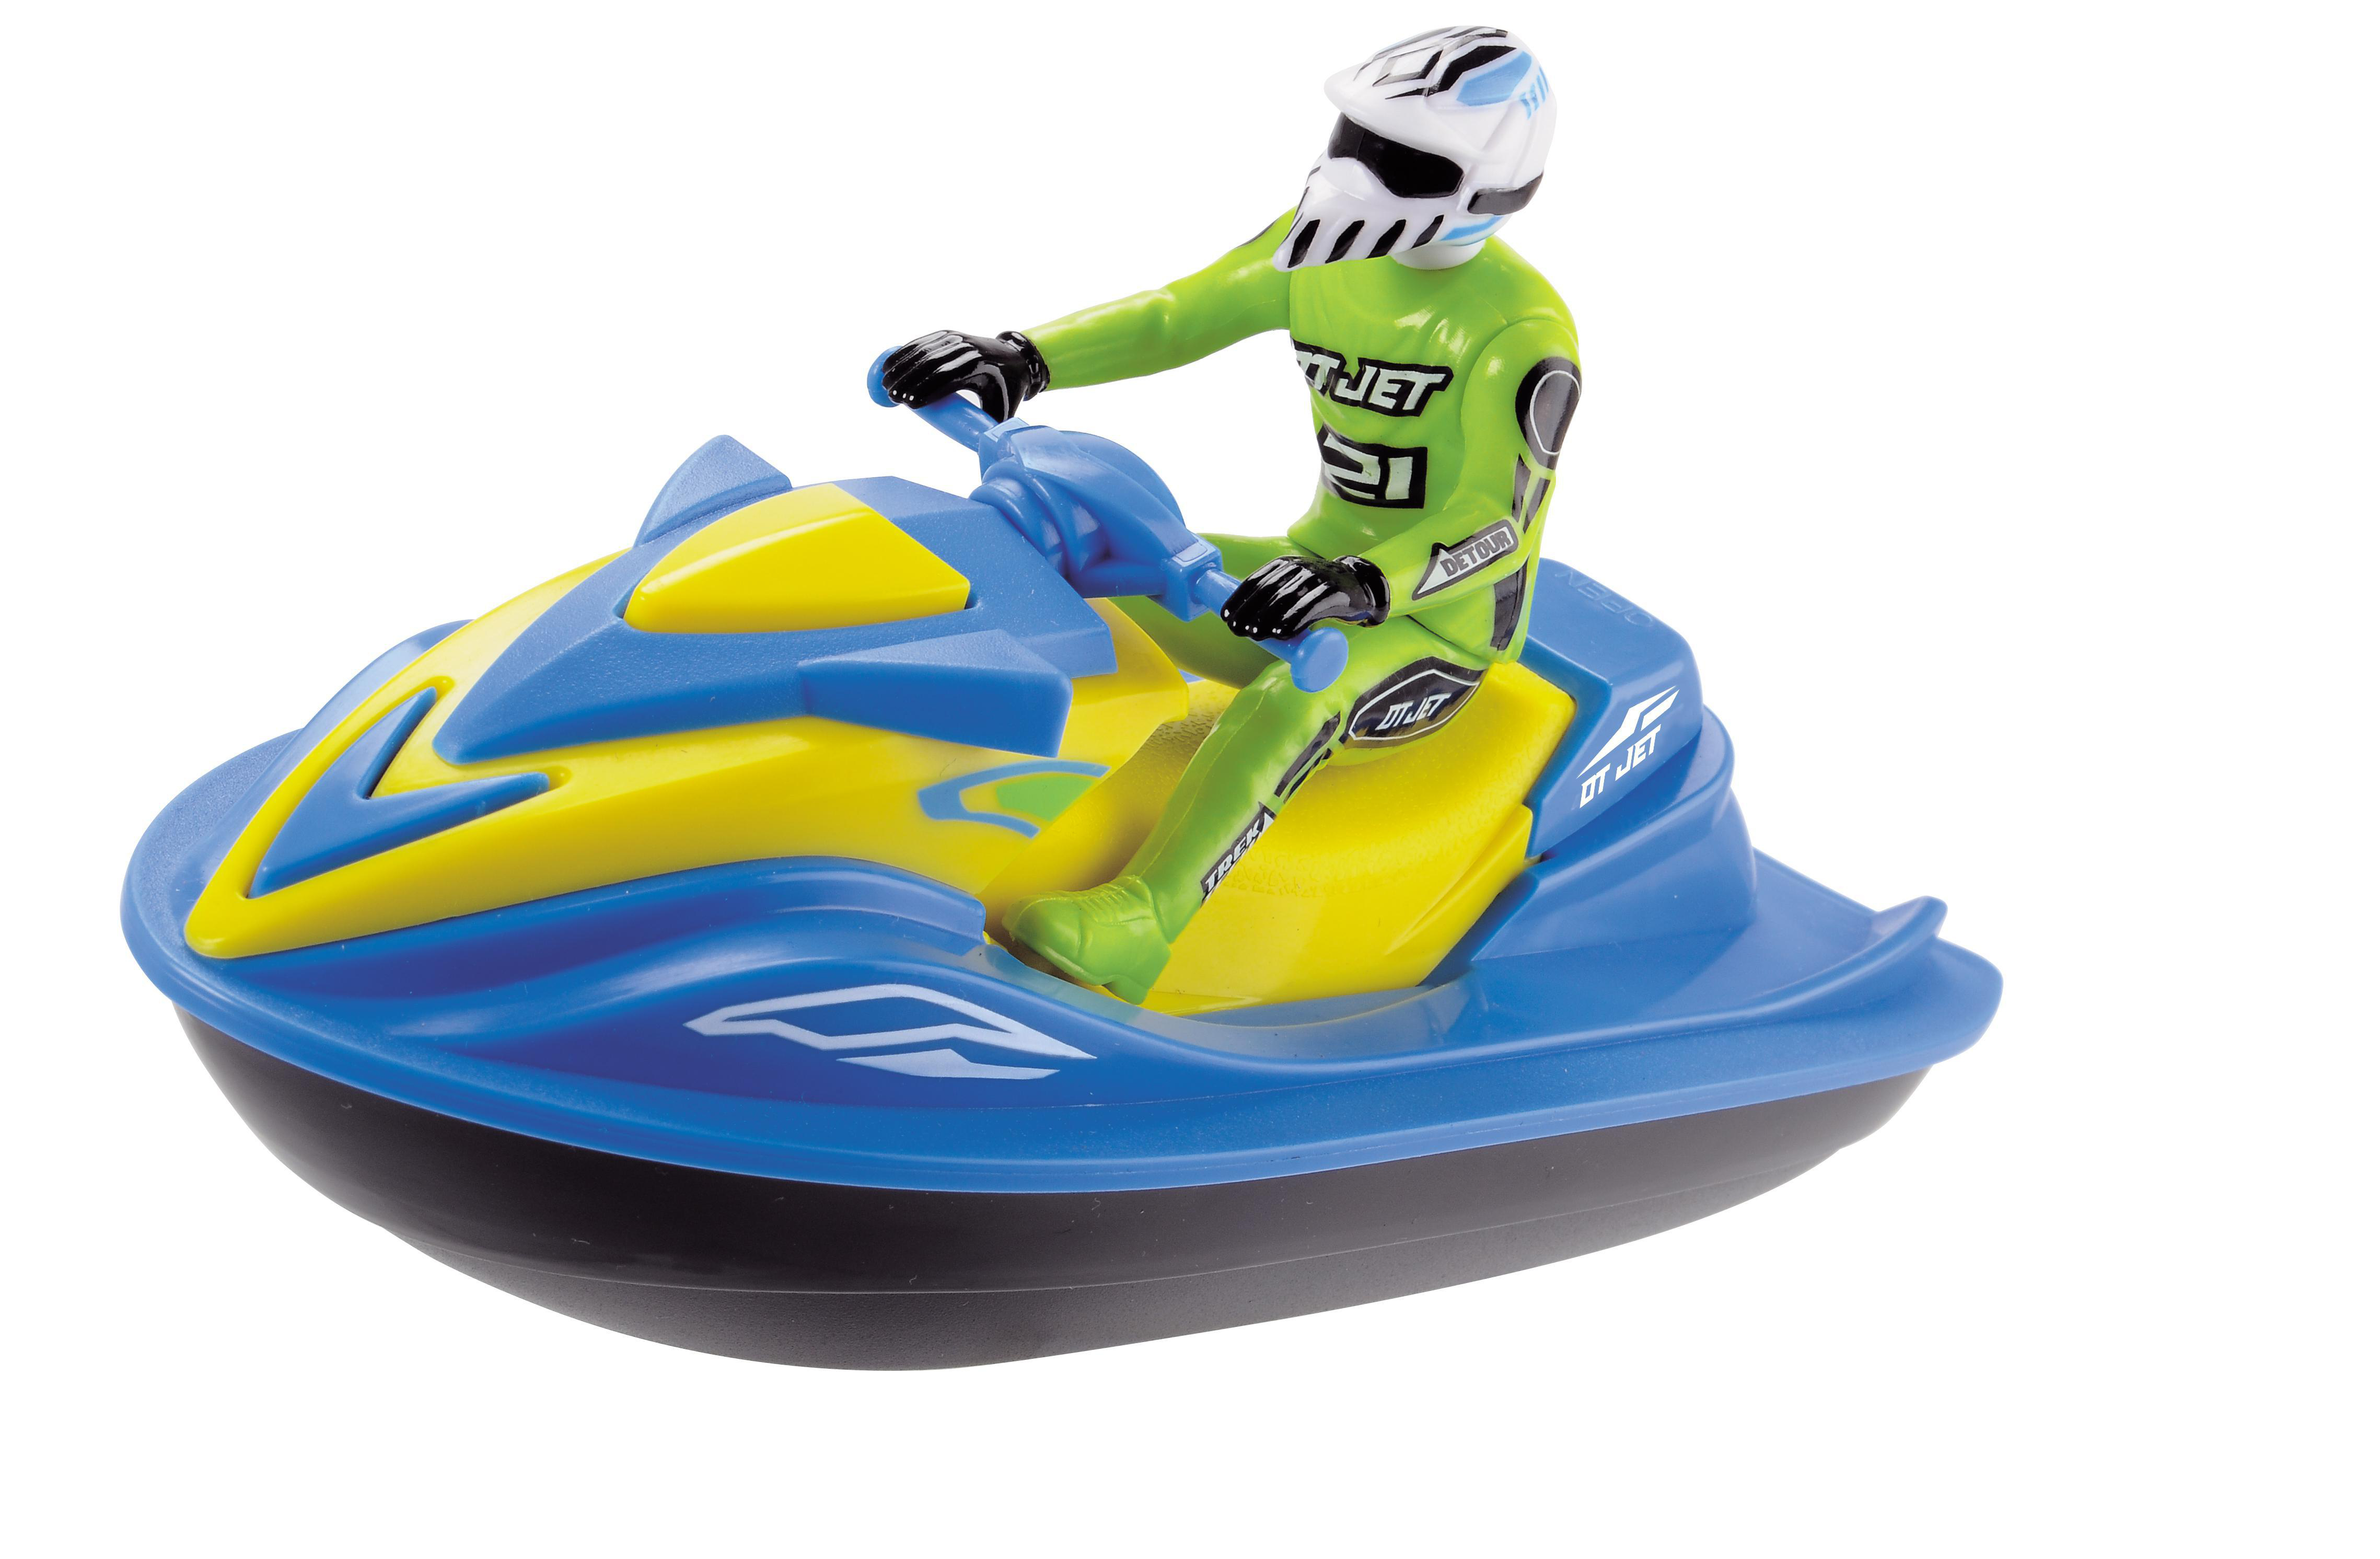 mit Ski DICKIE-TOYS Figur, Spielzeugauto 2-sortiert Mehrfarbig Jet